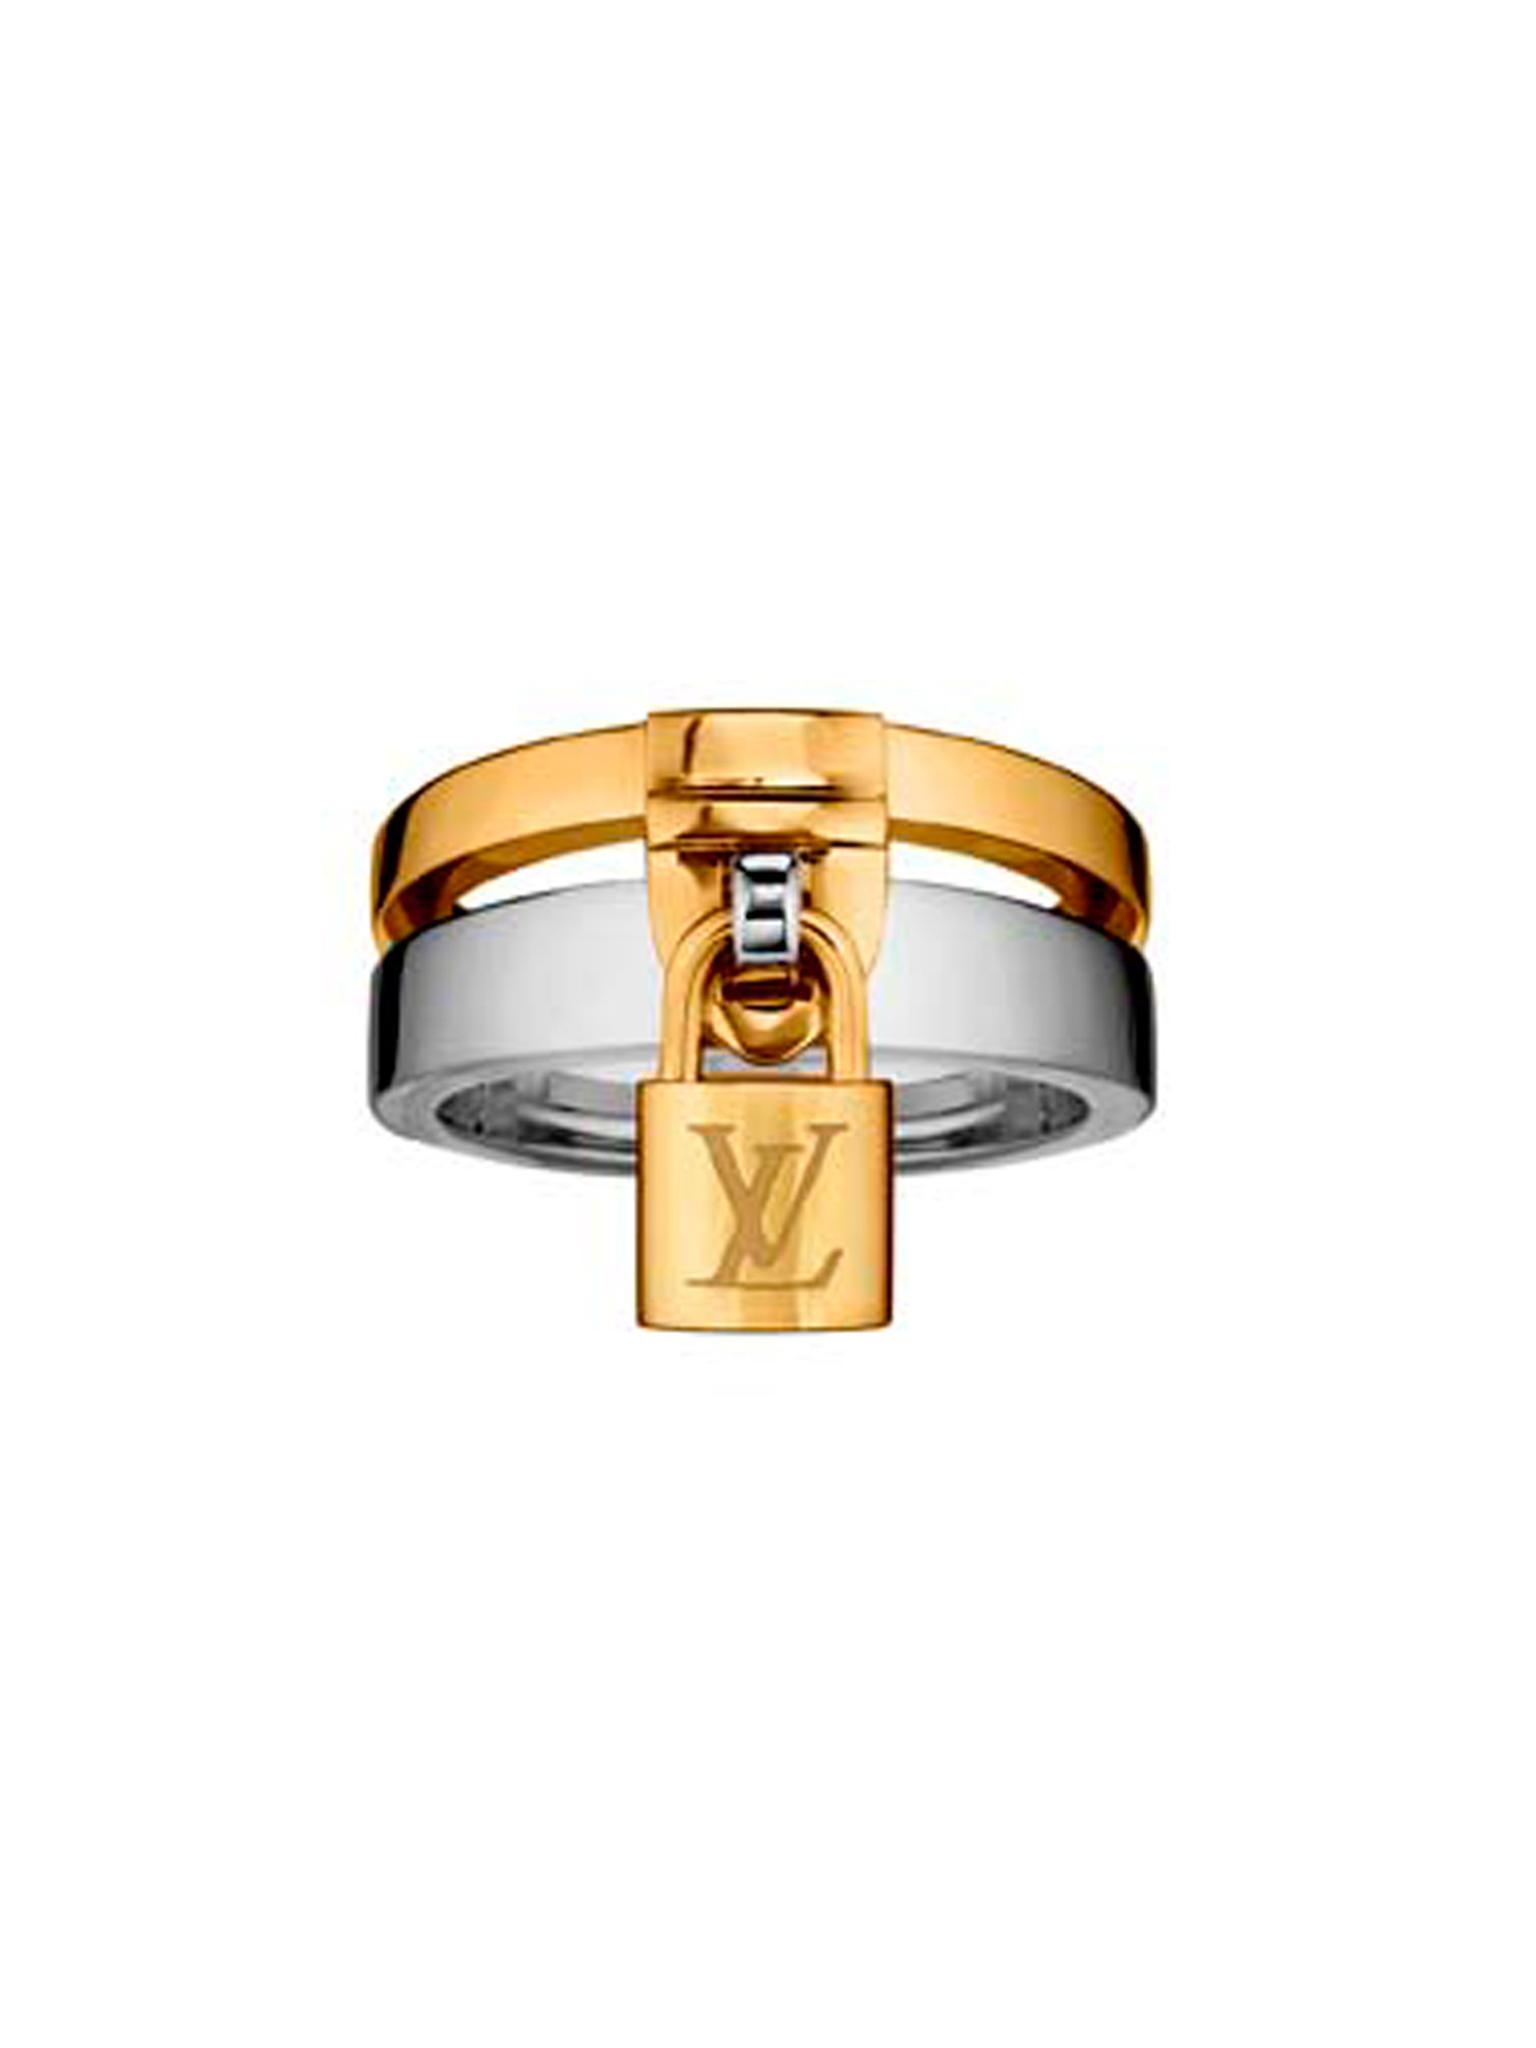 Lockit ring | Louis Vuitton | The Jewellery Editor